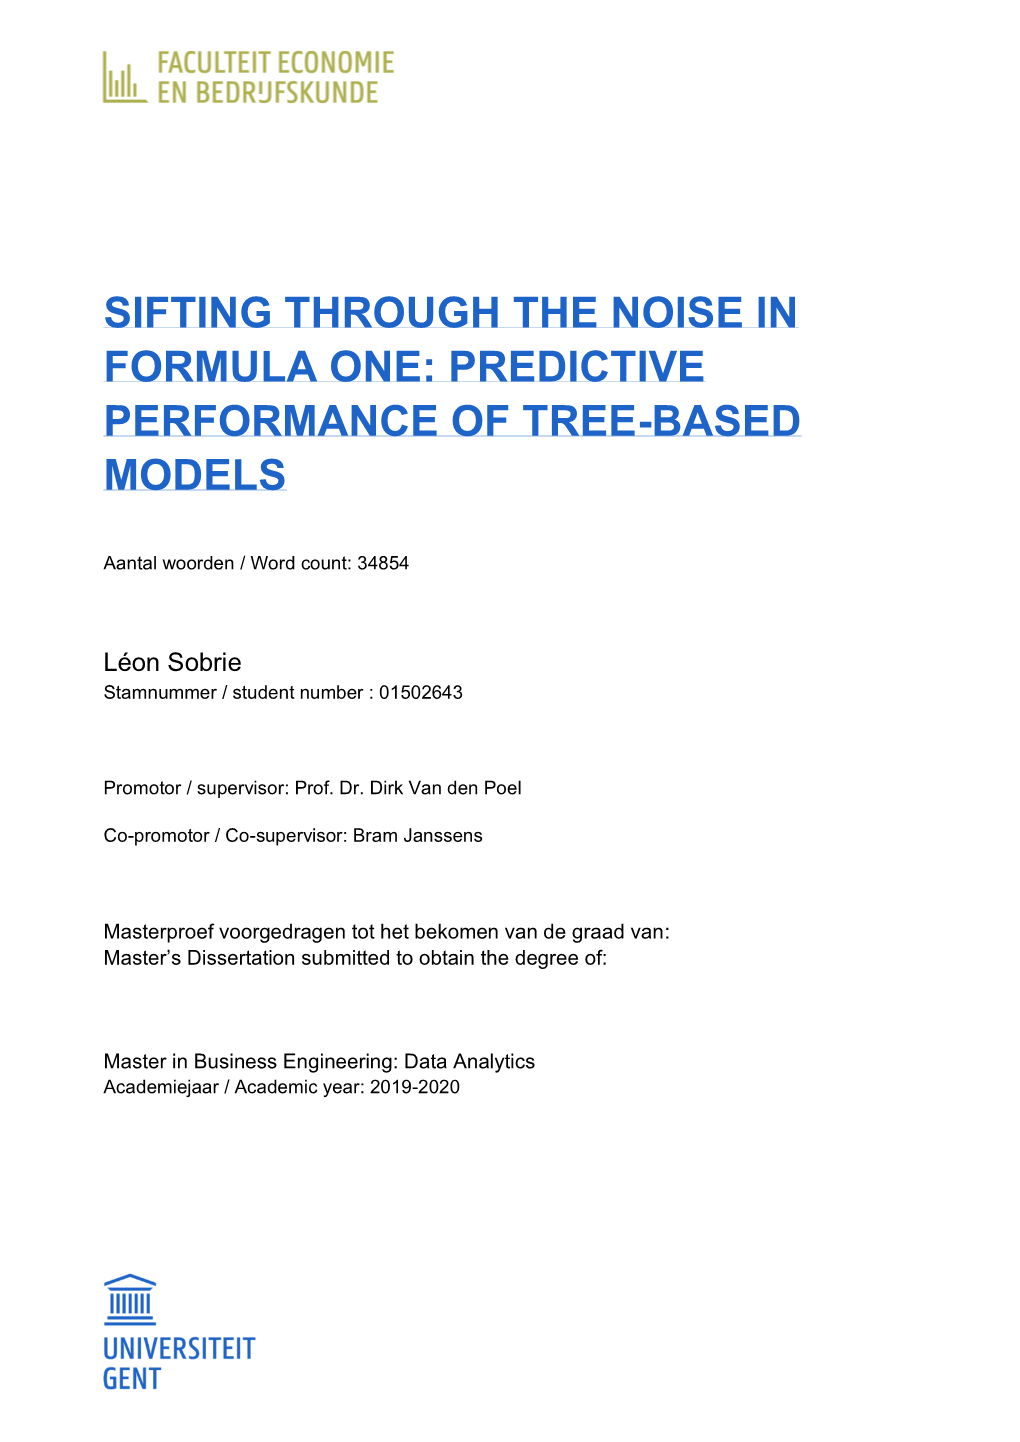 Predictive Performance of Tree-Based Models